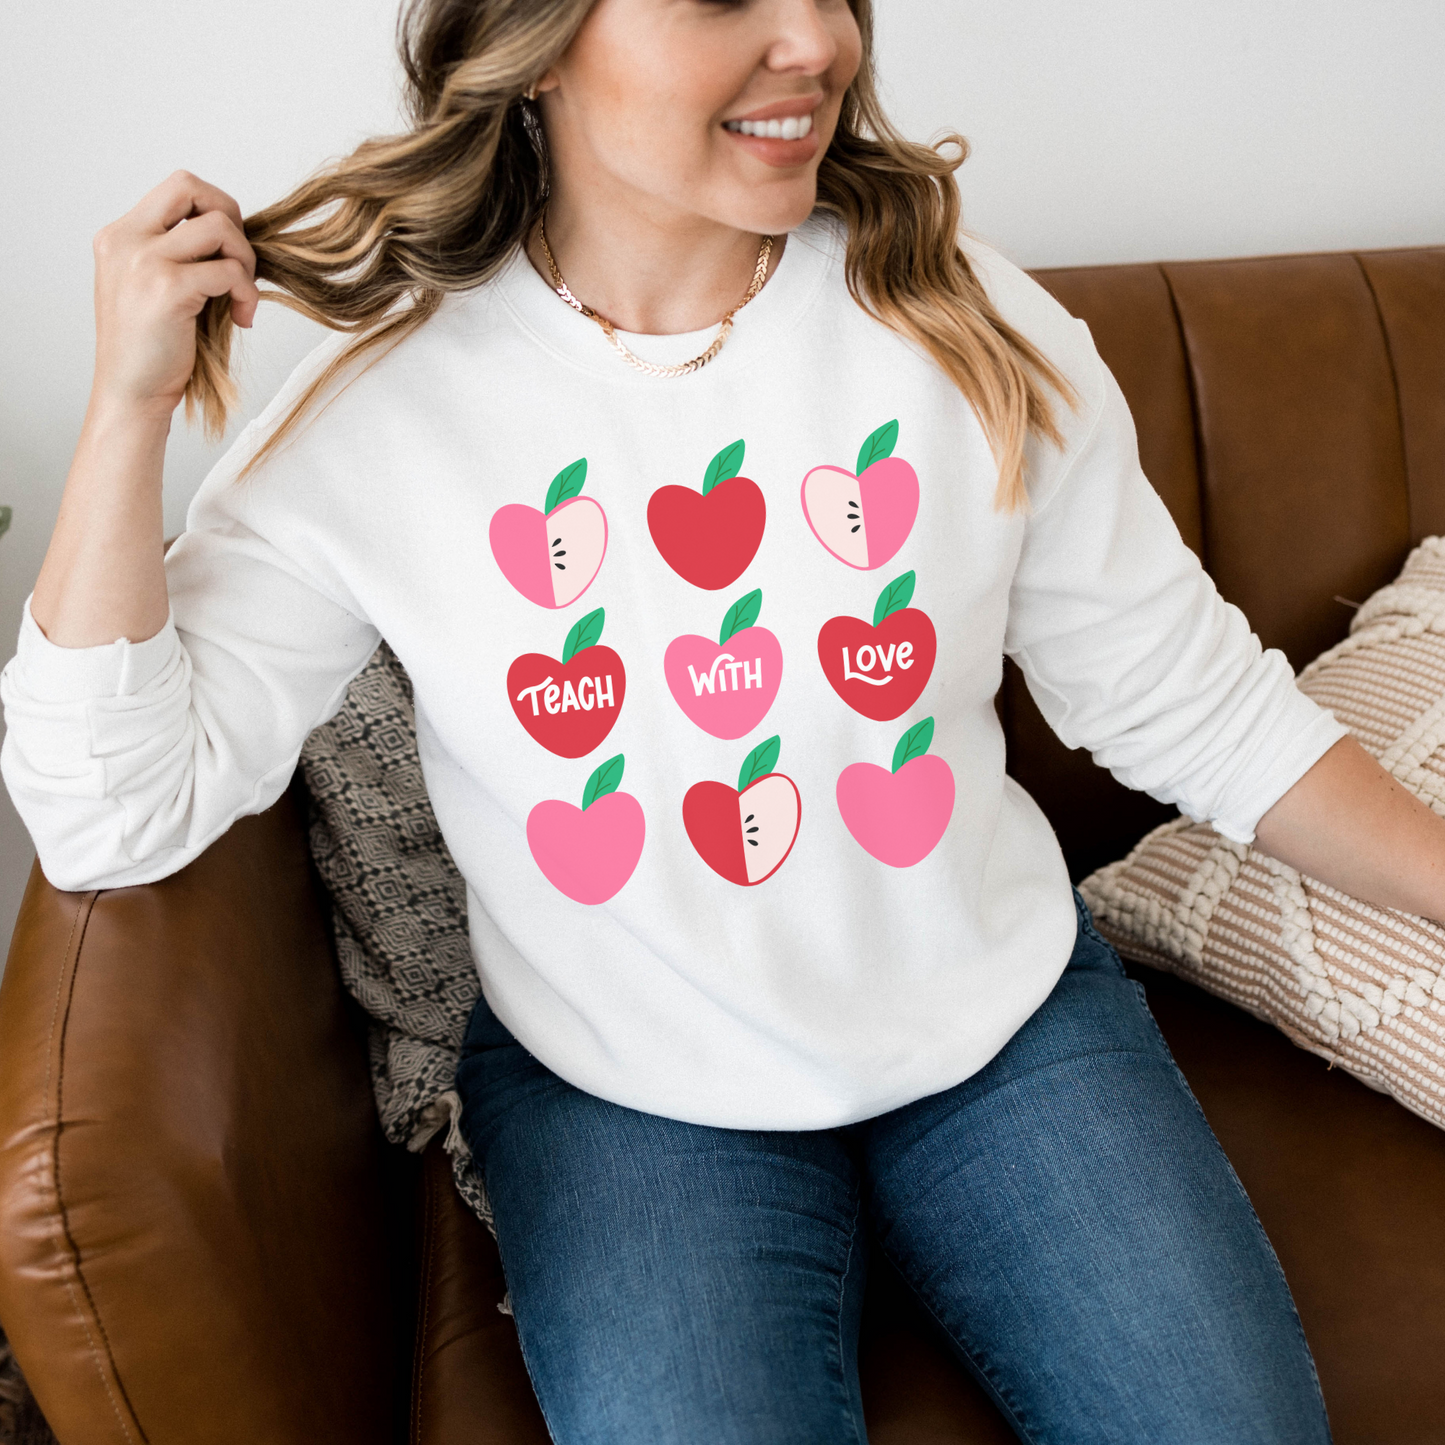 Teach With Love White Crewneck Sweater / Sweatshirt